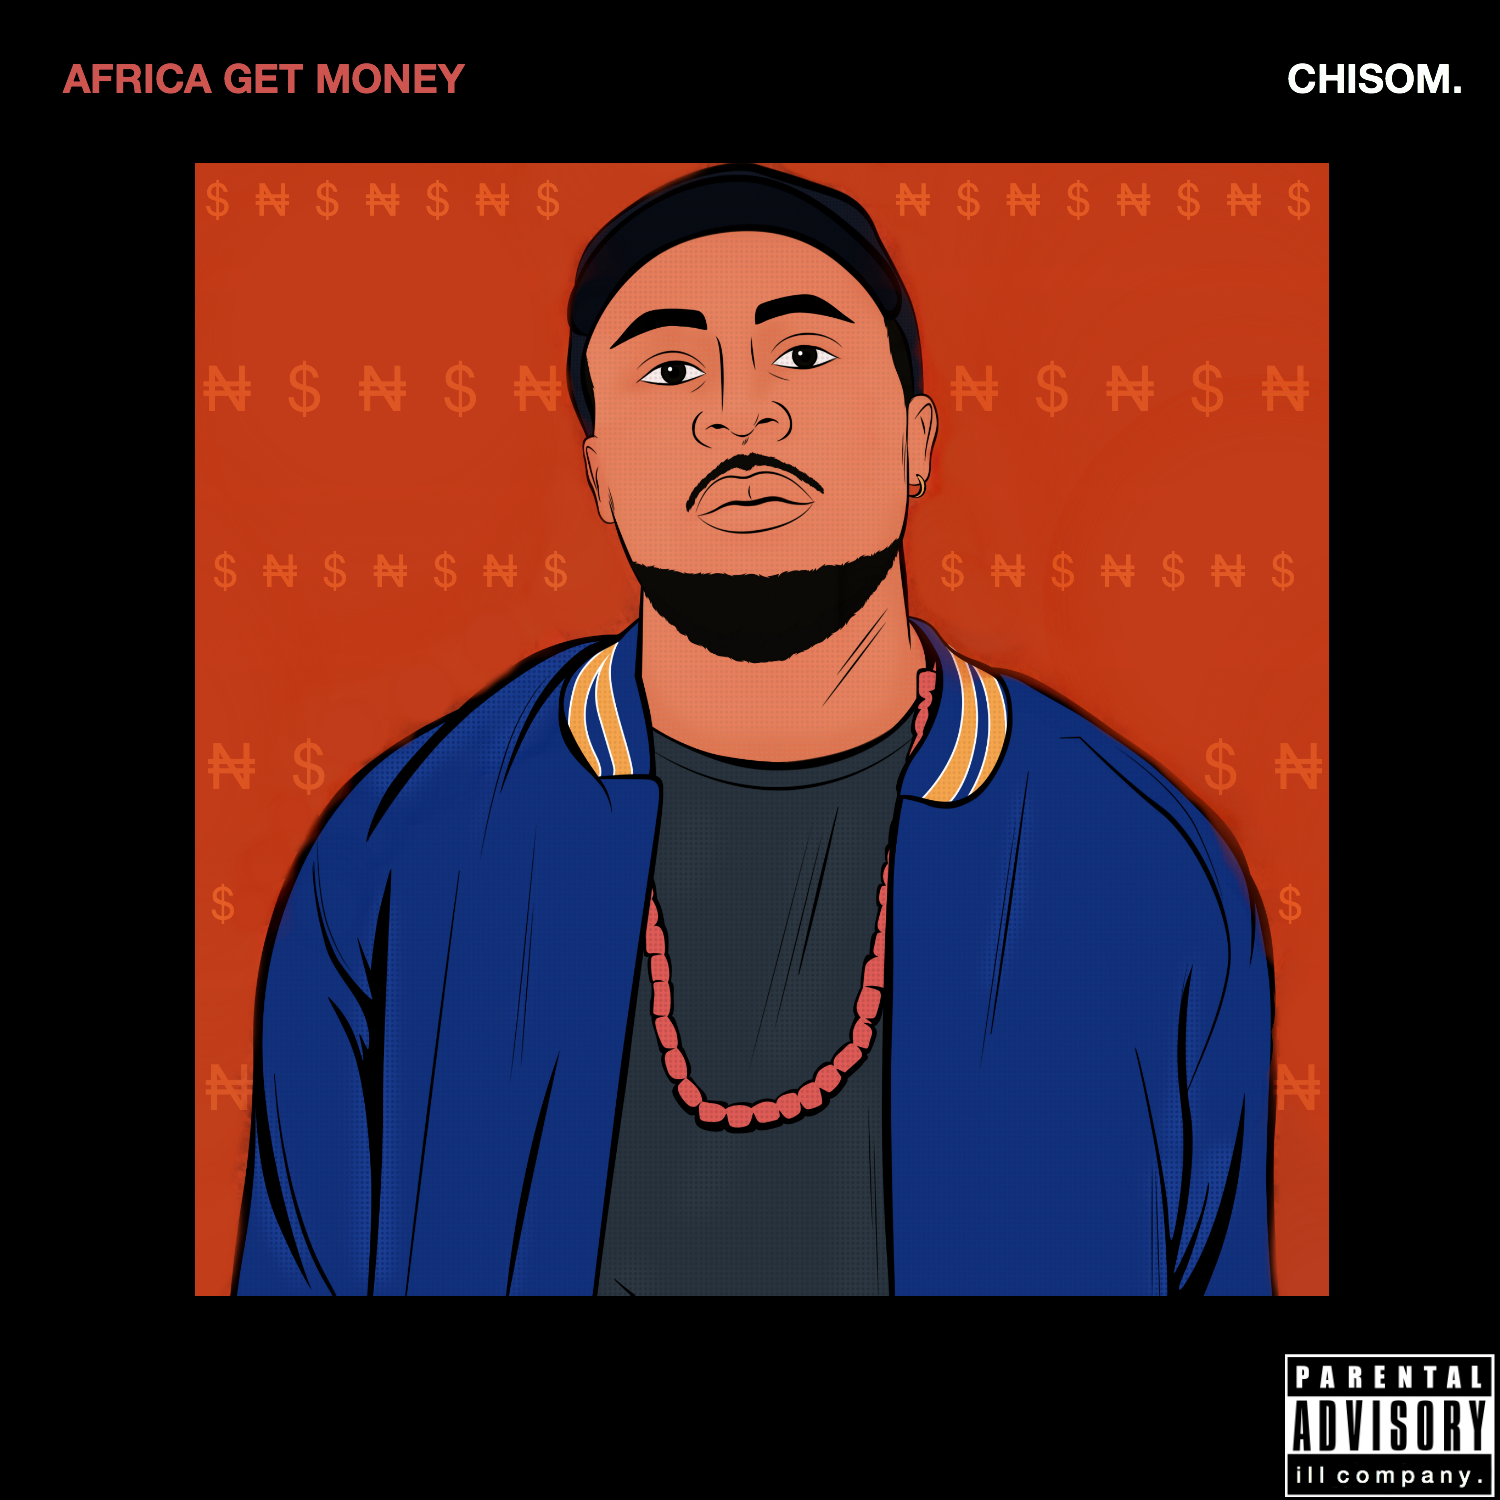 [Audio] "Africa Get Money" - Chisom.